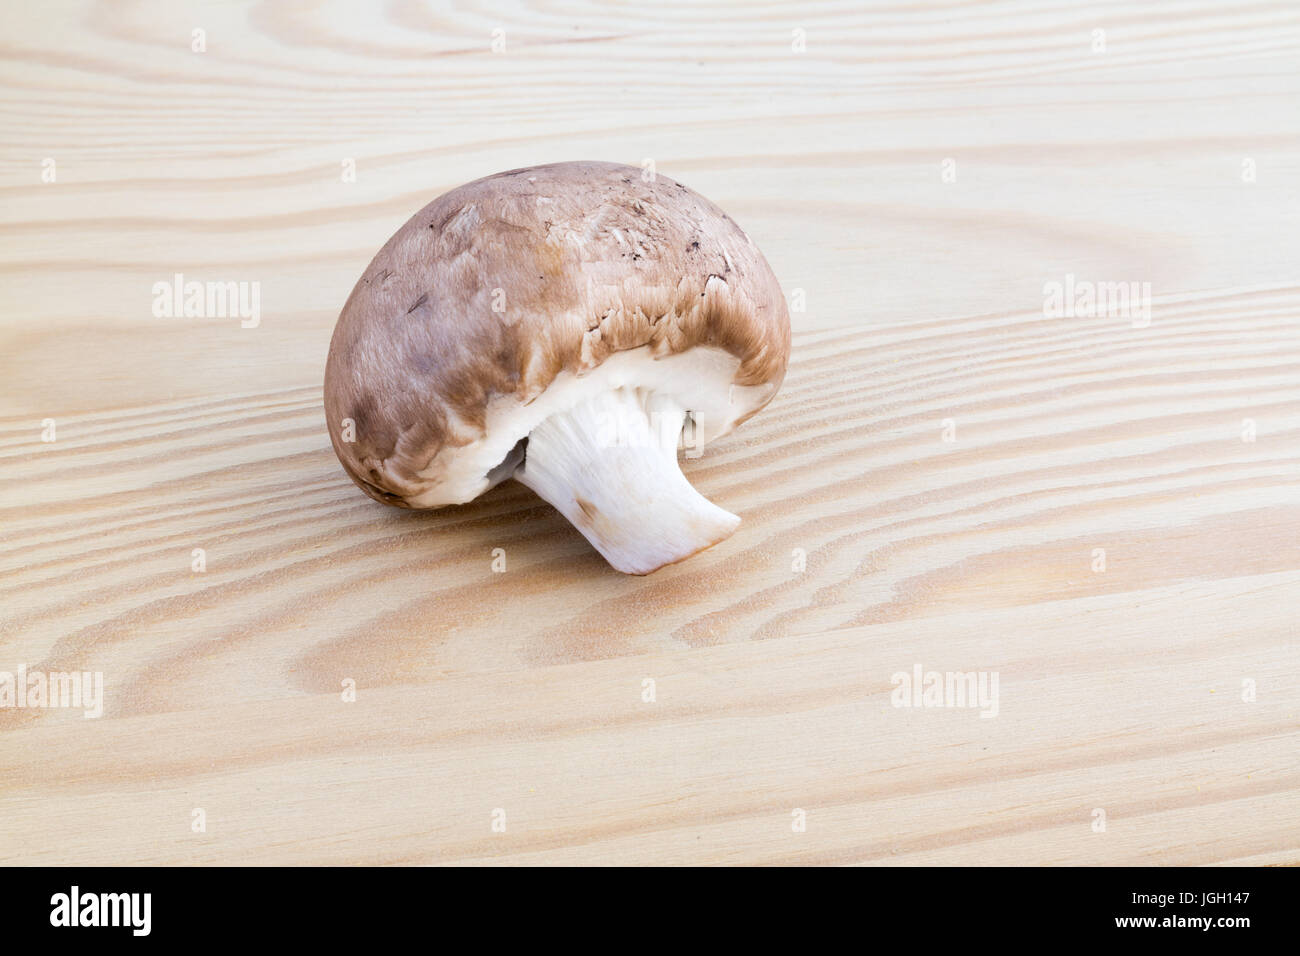 Chestnut mushroom on wooden cutting board Stock Photo